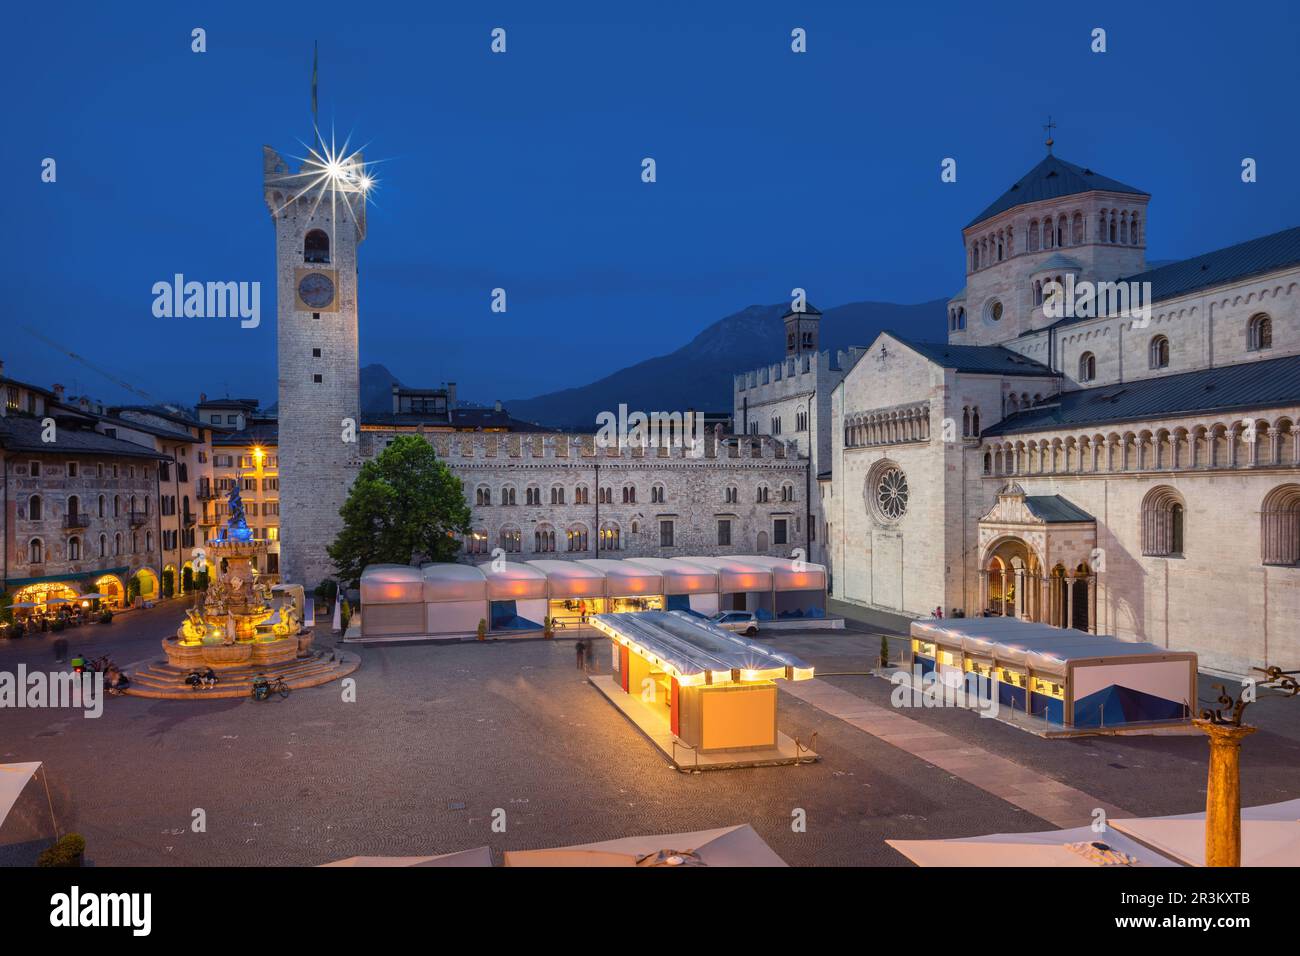 Trento, Italien - Blick auf den Platz Piazza del Duomo mit Kathedrale und Torre Civica Turm Stockfoto